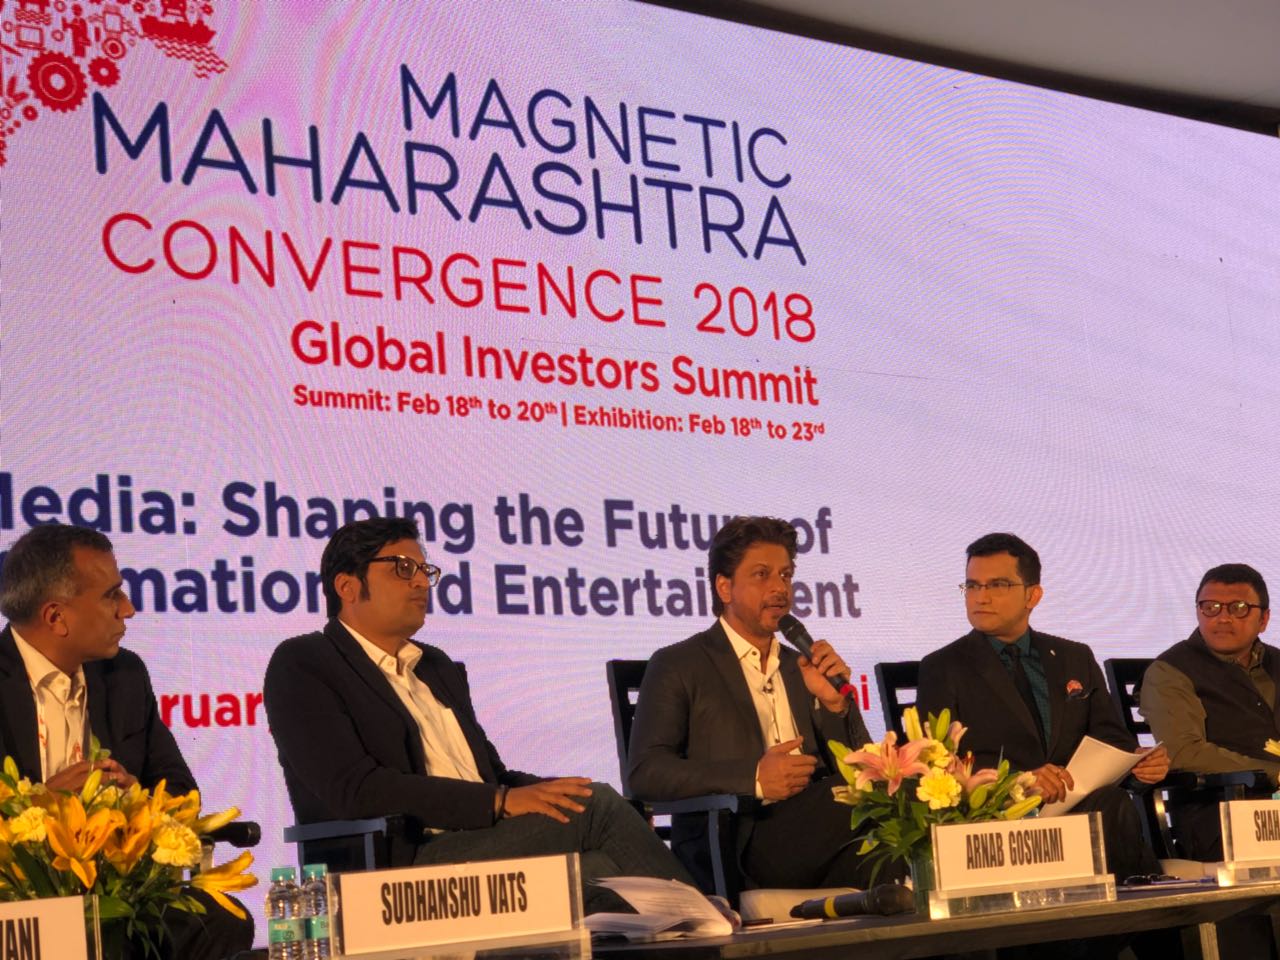 Shah Rukh Khan, Filmmaker, Ritesh Sidhwani, Magnetic Maharashtra Convergence Summit